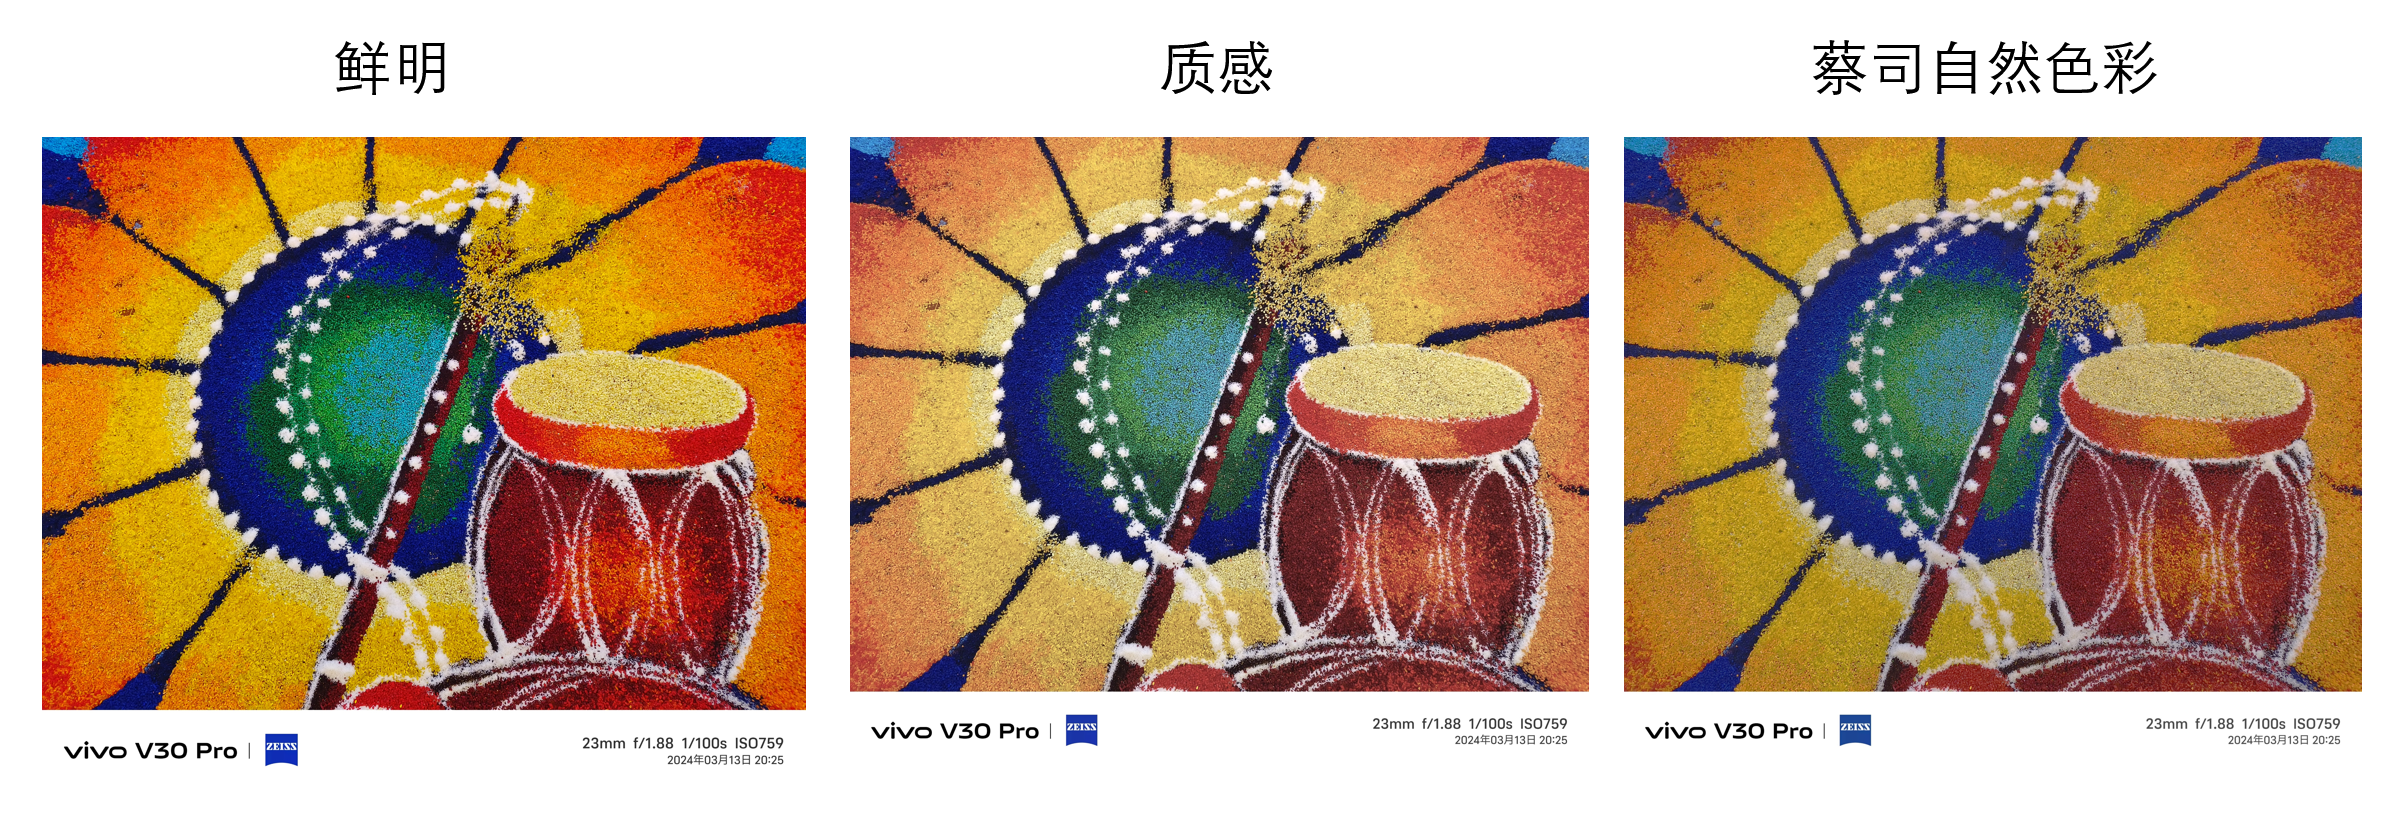 vivo V30 Pro：蔡司三摄+柔光环人像3.0，专业摄影普及化的里程碑 83